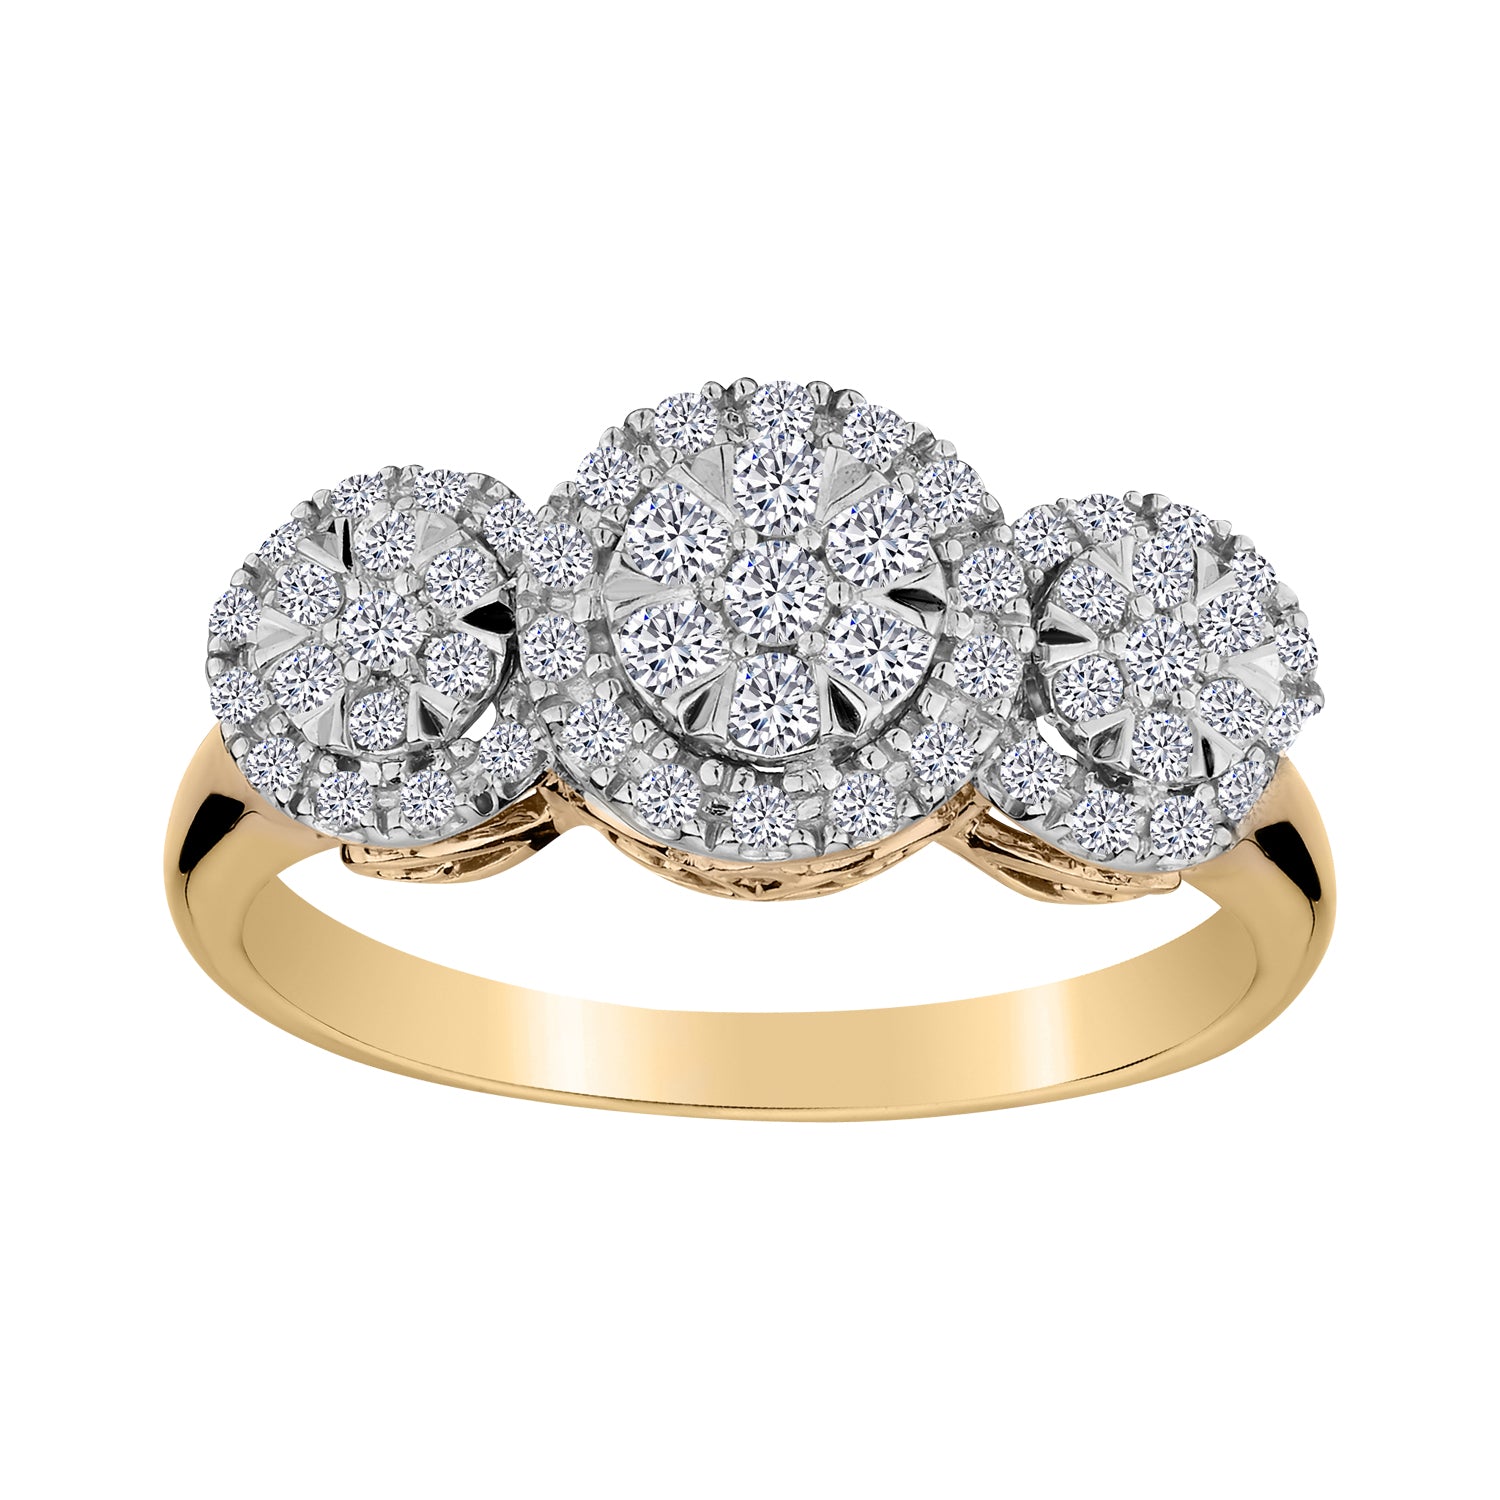 .50 Carat "Past, Present, Future" Diamond Ring, 10kt Yellow Gold…...................NOW